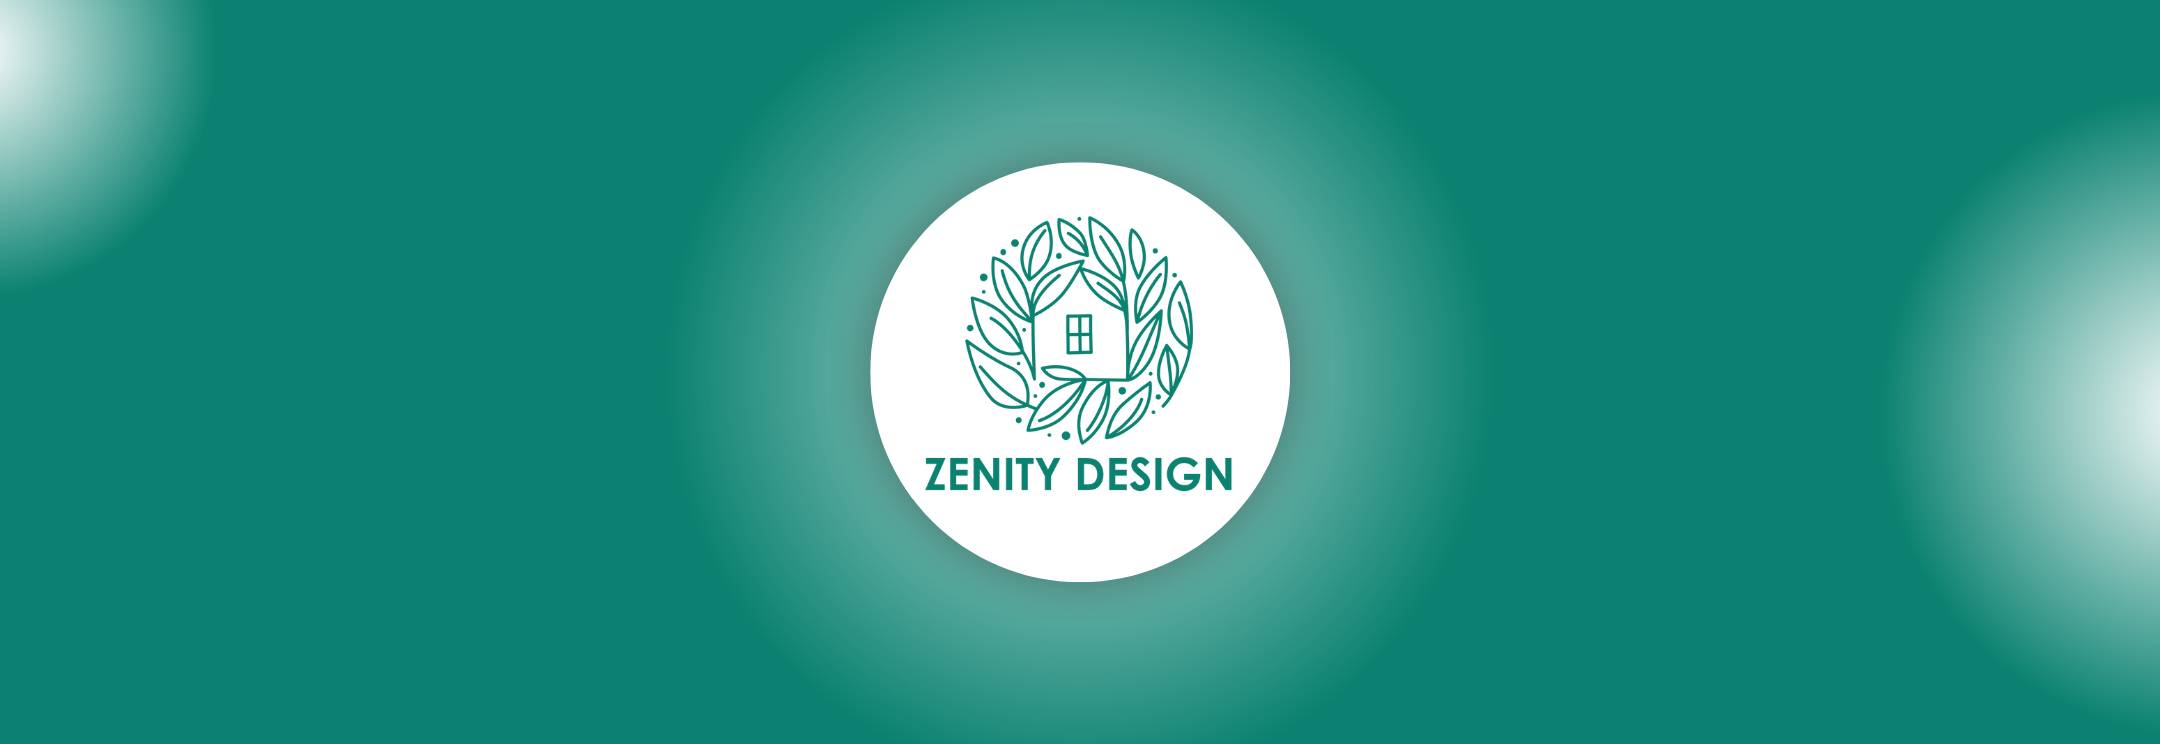 Client Zenity Design Renovation Marketing Ingenious